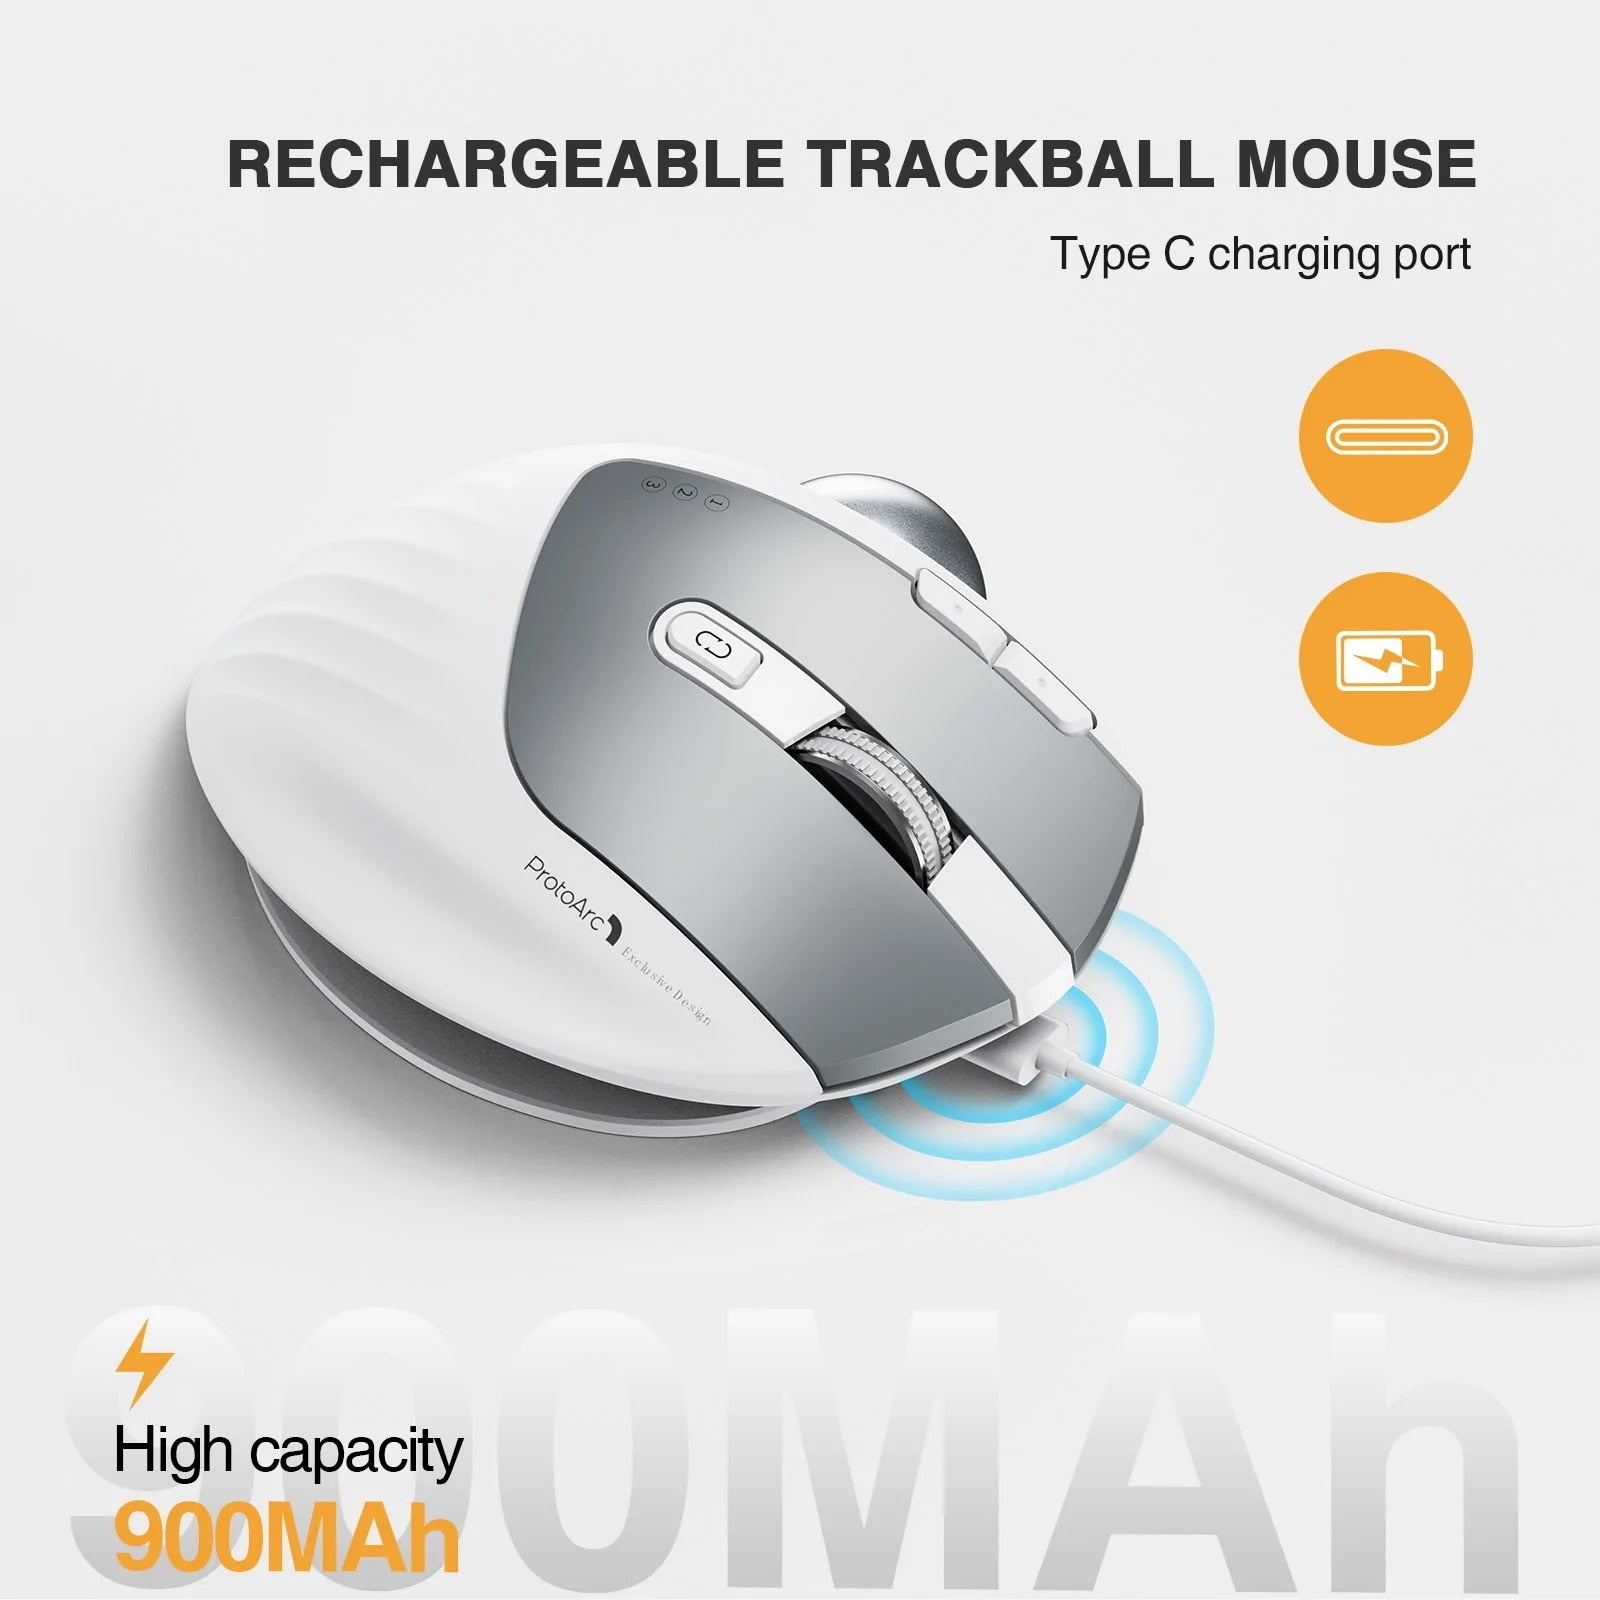 VOGEK 2.4G RGB Pro Wireless Rechargeable Ergonomic Trackball Mouse